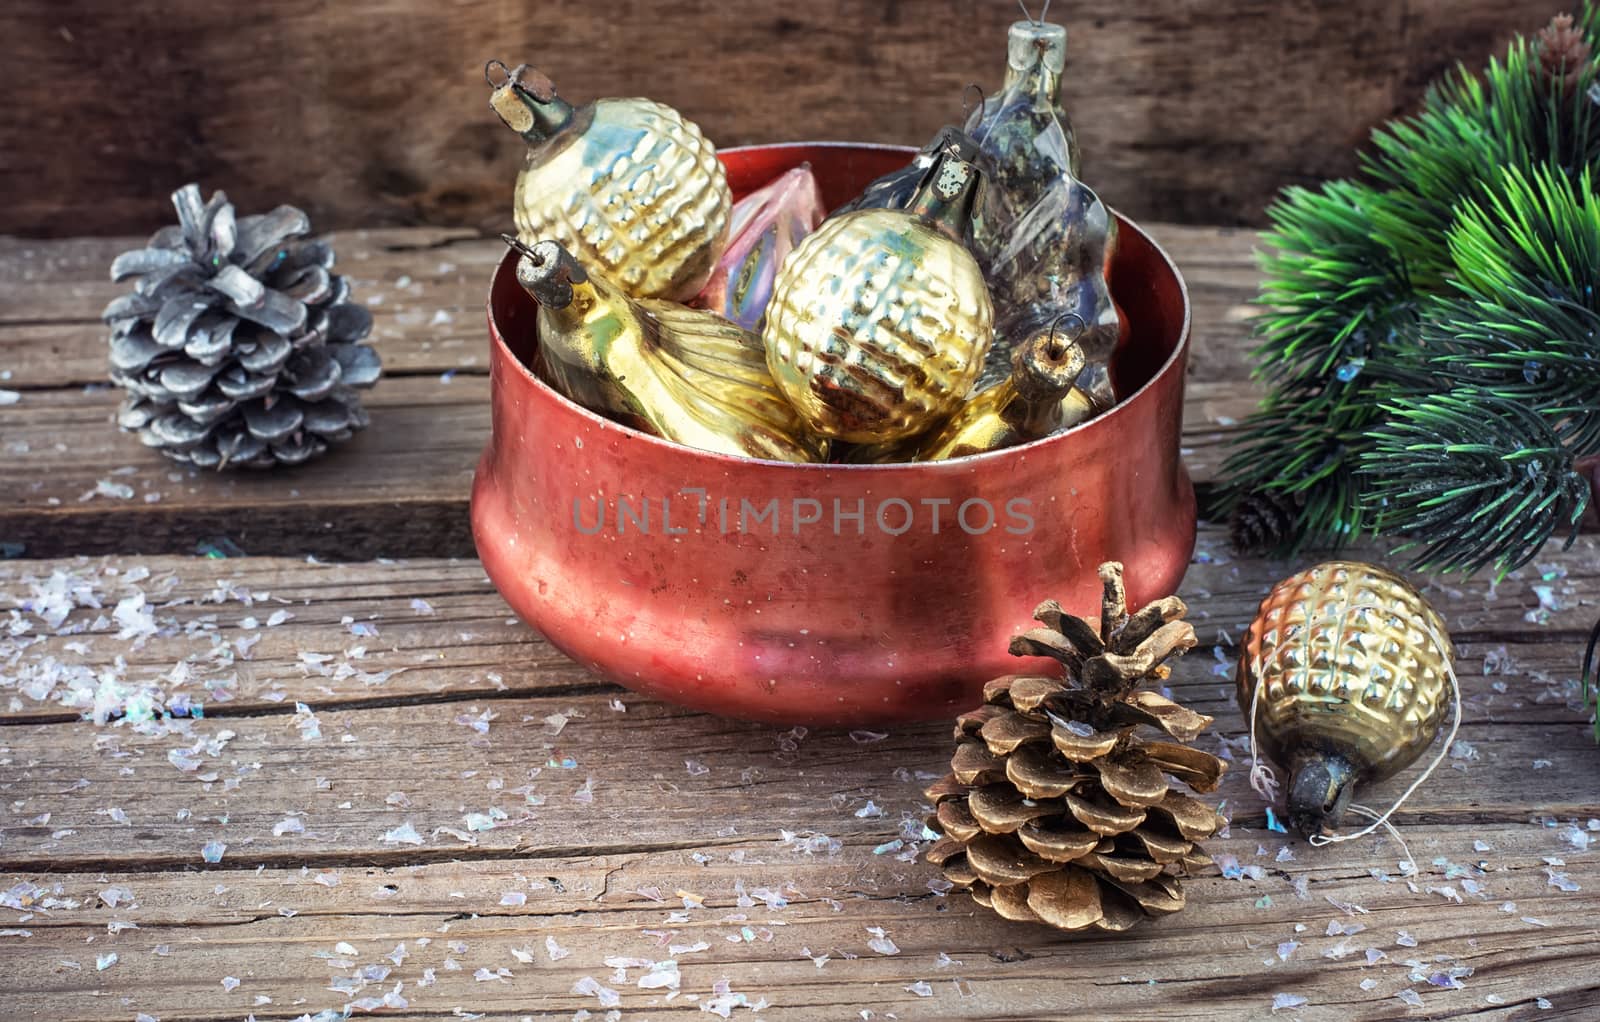 Christmas decorations by LMykola